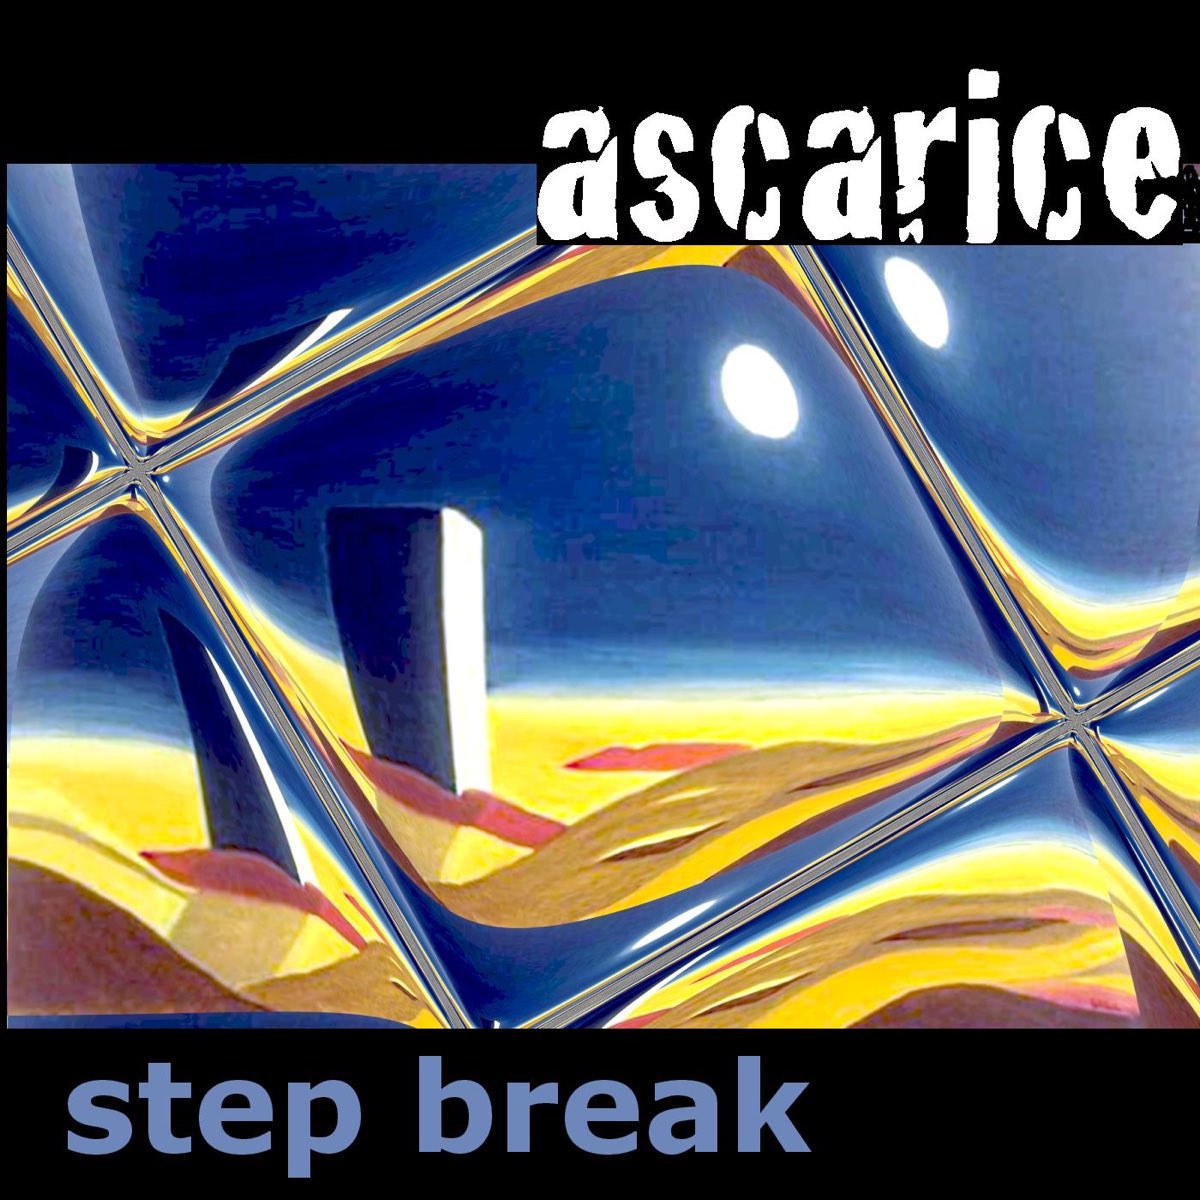 Break step